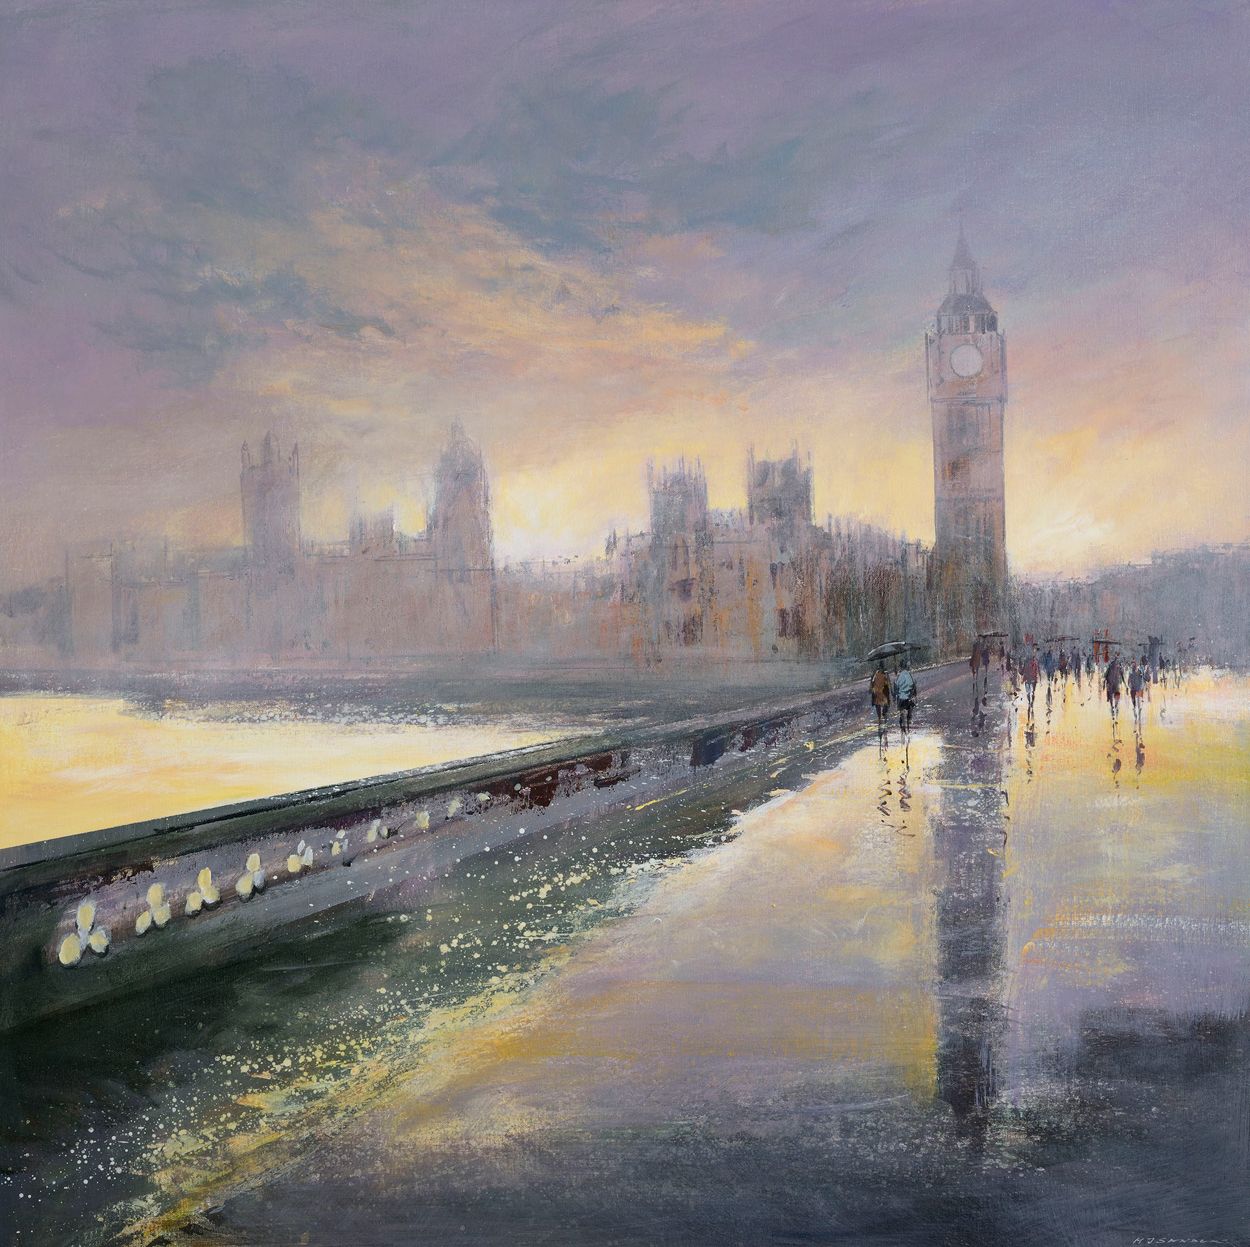 London After Rain by Michael Sanders